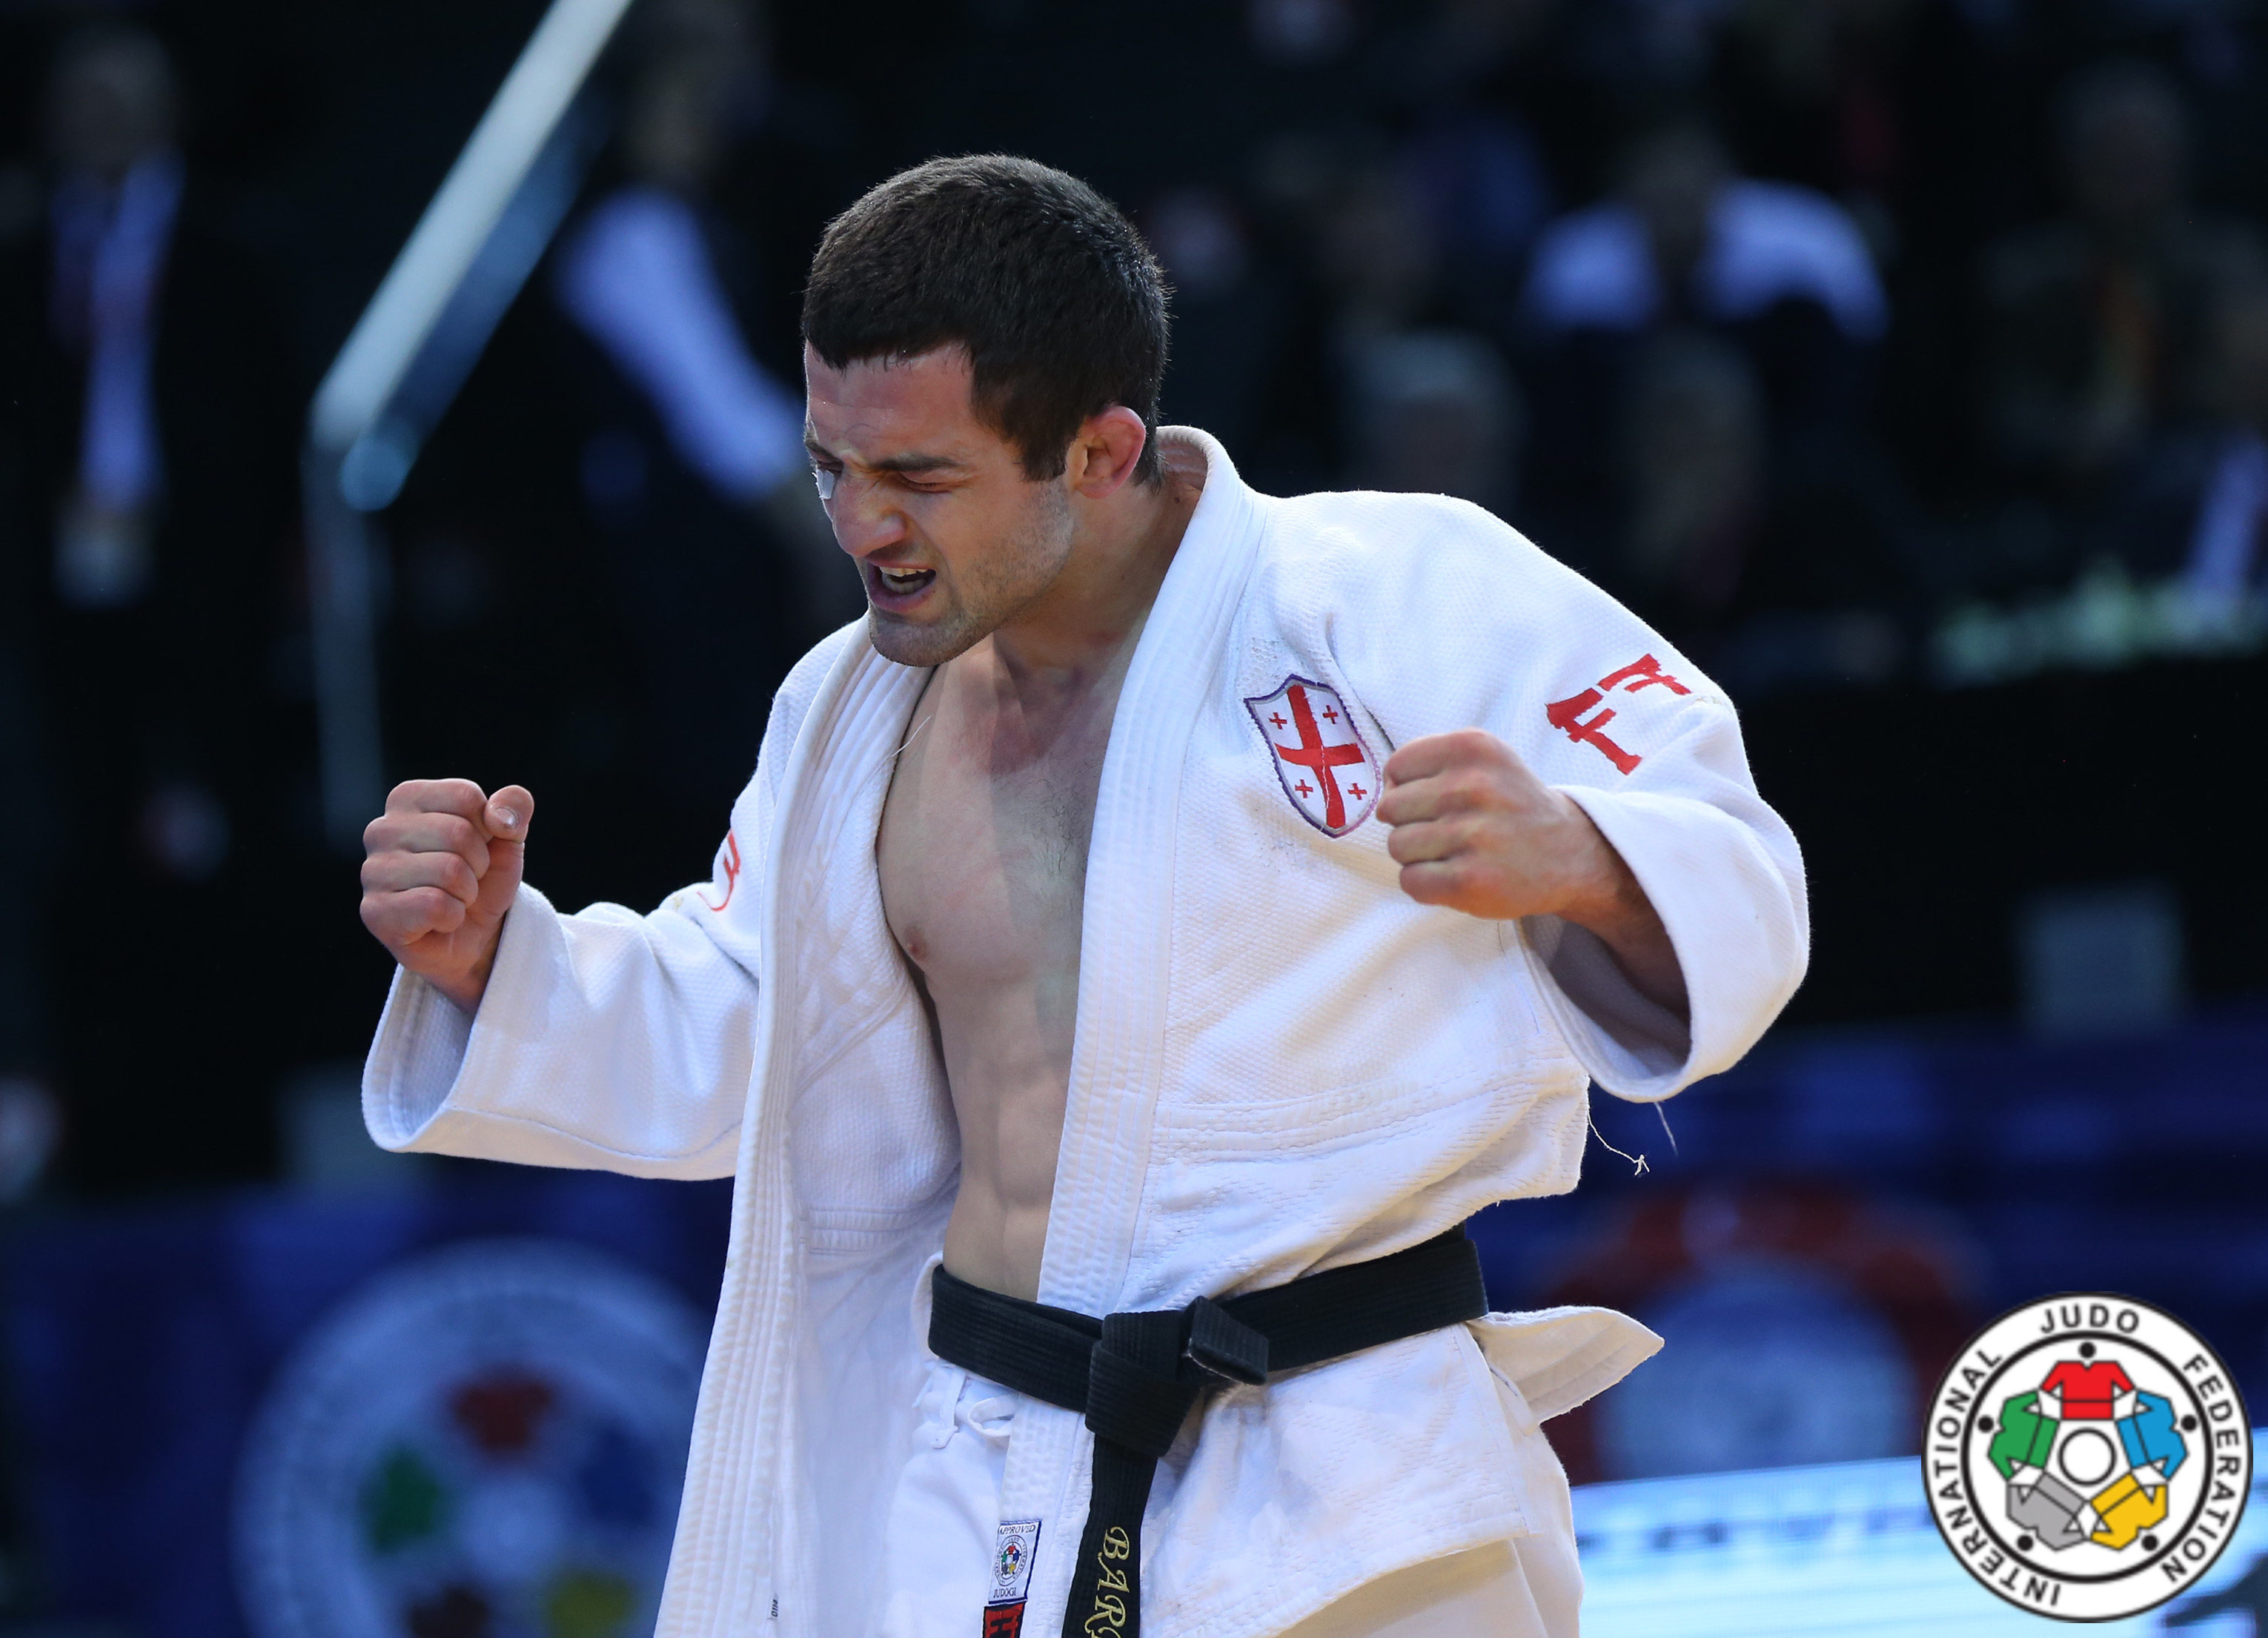 Georgian Judo Federation